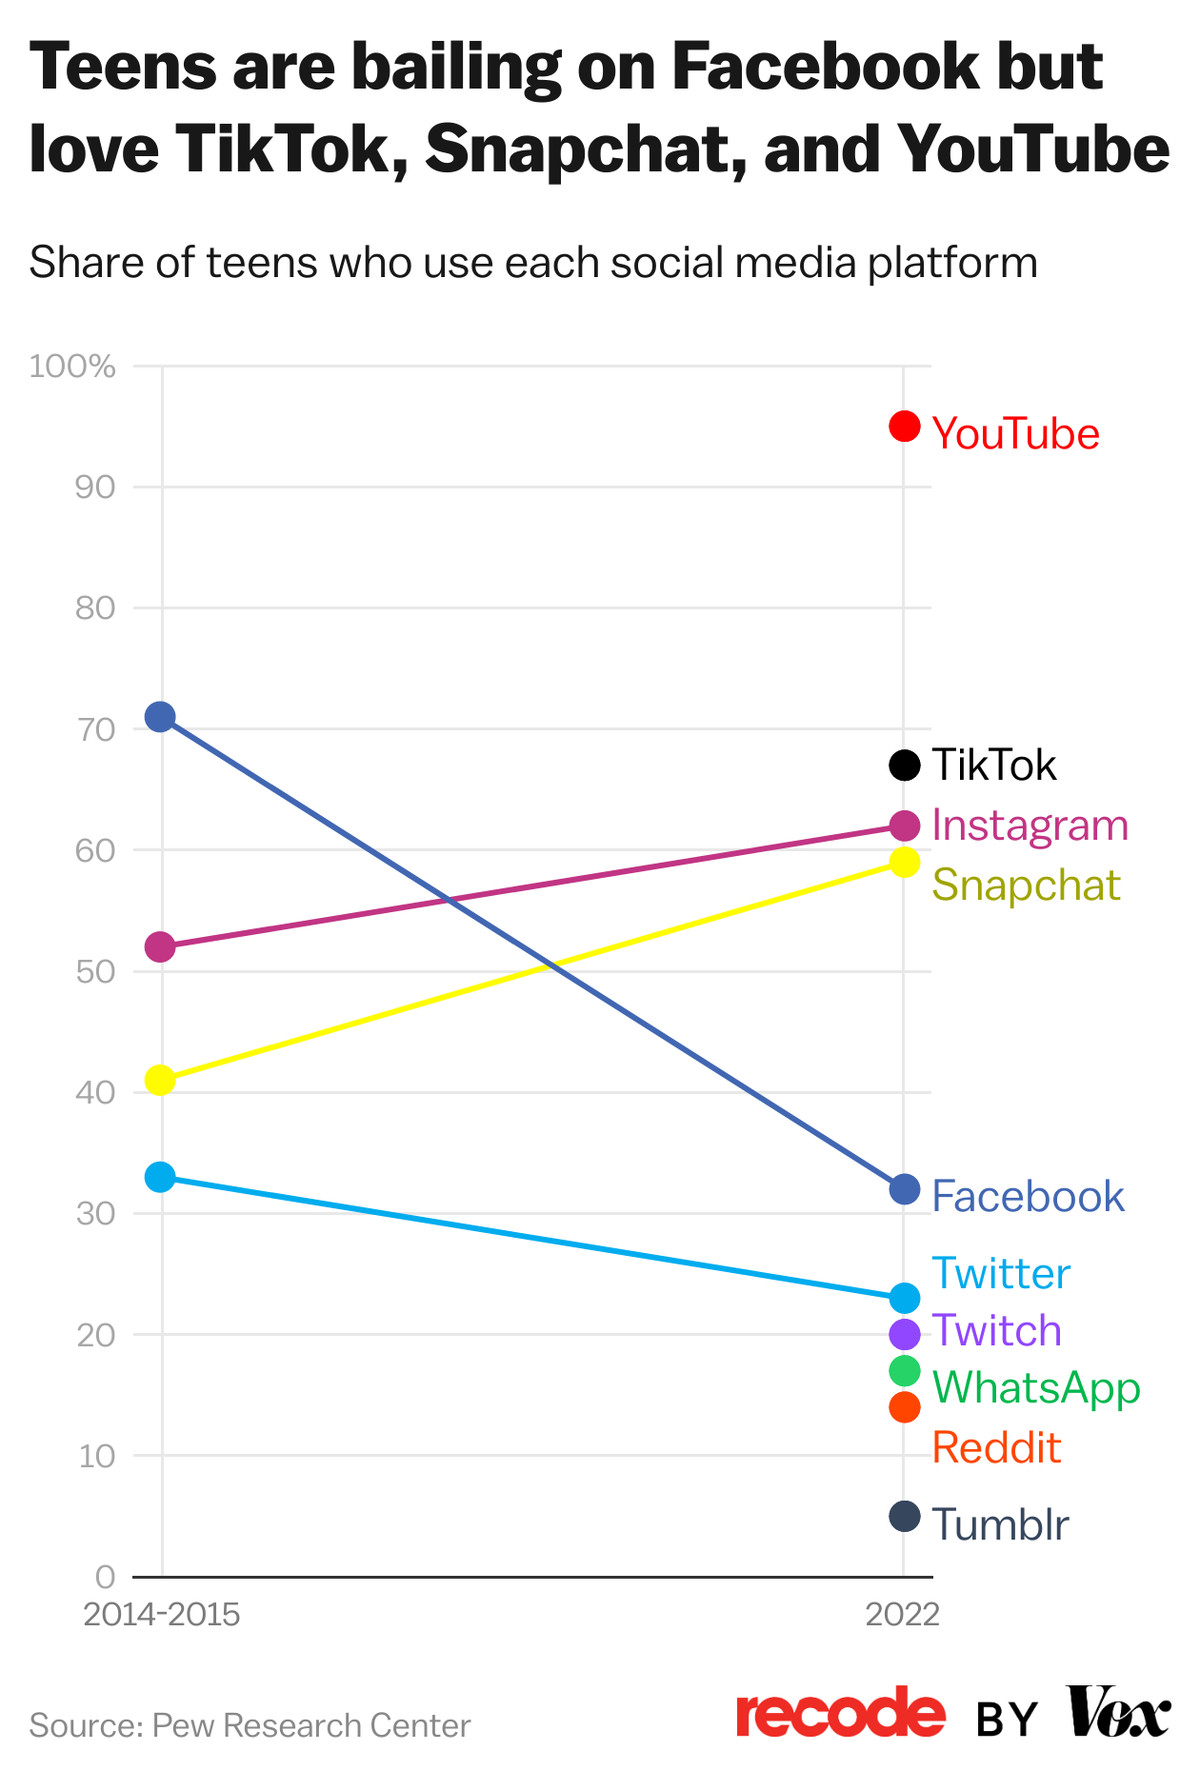 Bagan: Pangsa remaja yang menggunakan setiap platform media sosial.  Remaja menawarkan Facebook tetapi menyukai TikTok, Snapchat, dan YouTube 